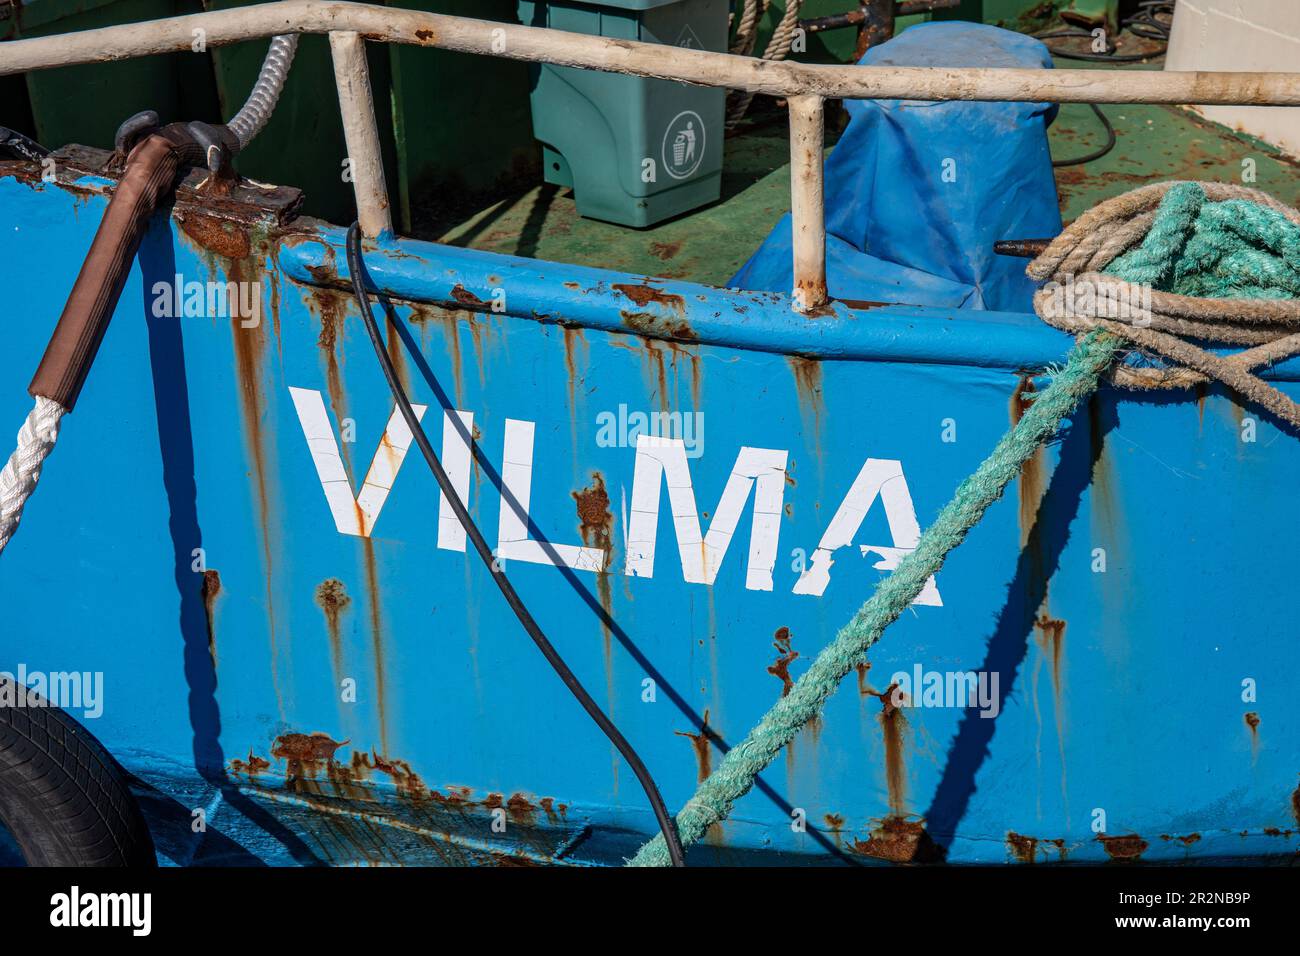 Vilma, the name of an old rusty fishing vessel in Tallinn, Estonia Stock Photo